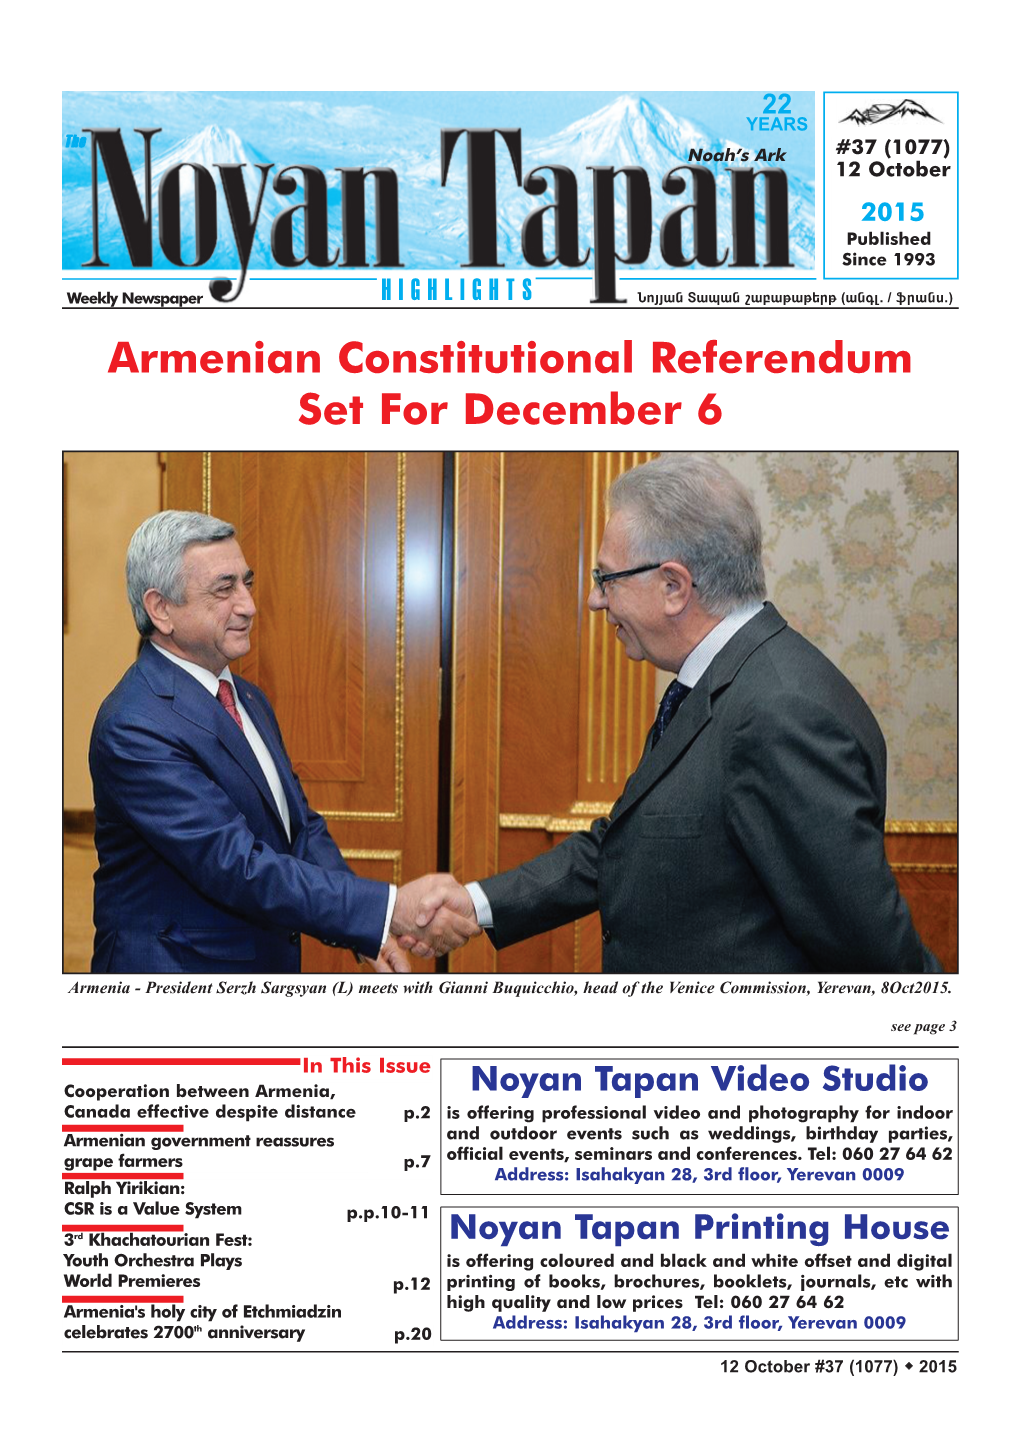 Armenian Constitutional Referendum Set for December 6